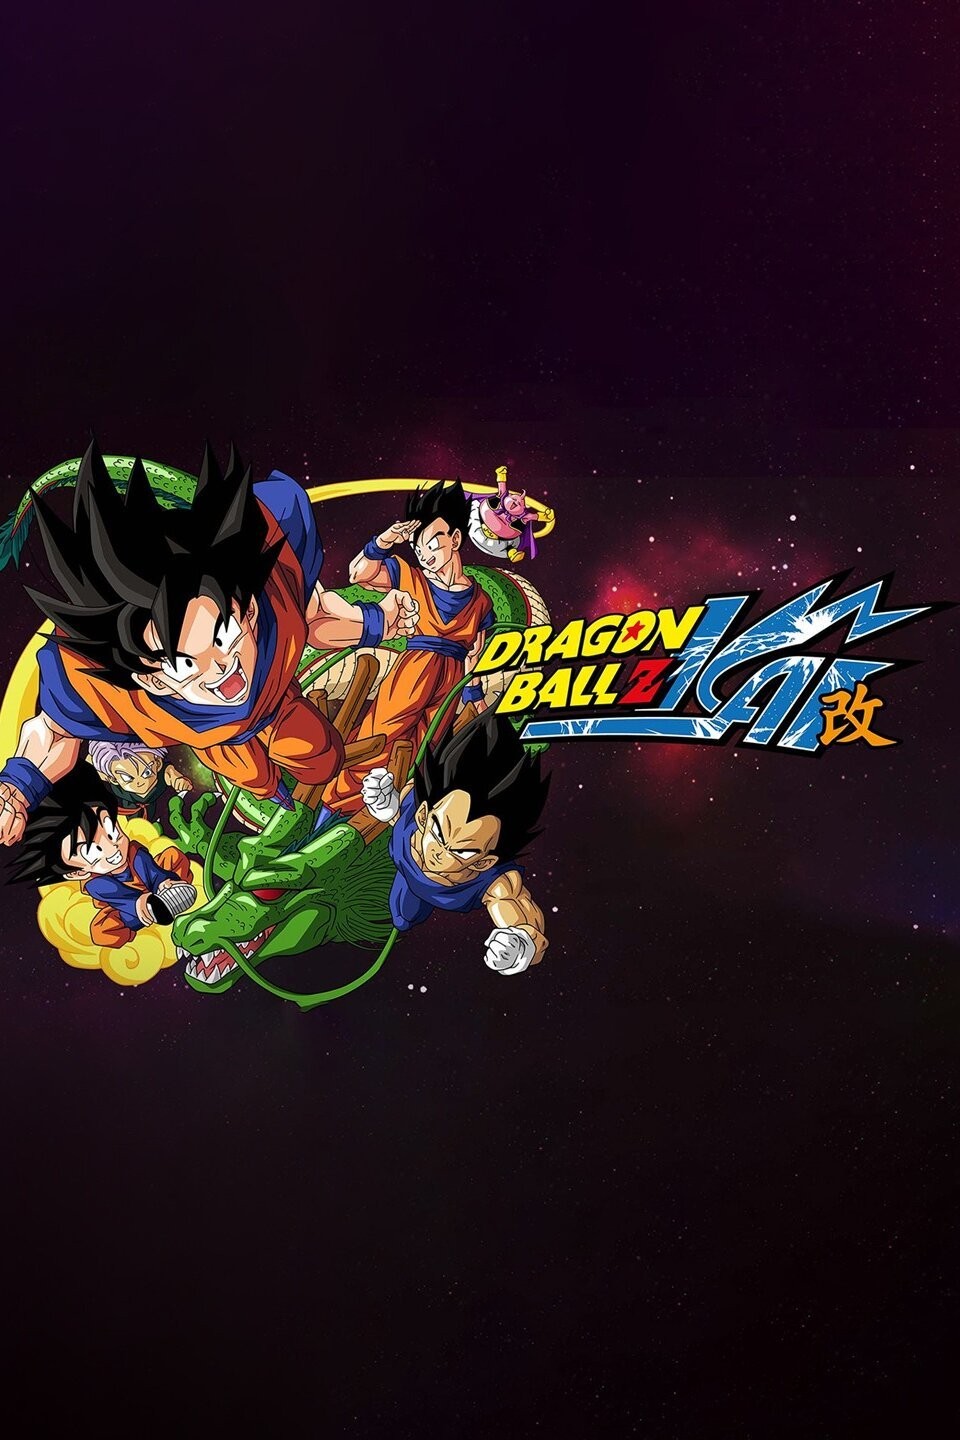 Dragon Ball Z: Movies 1 and 2 Anime UK News Review – Hogan Reviews